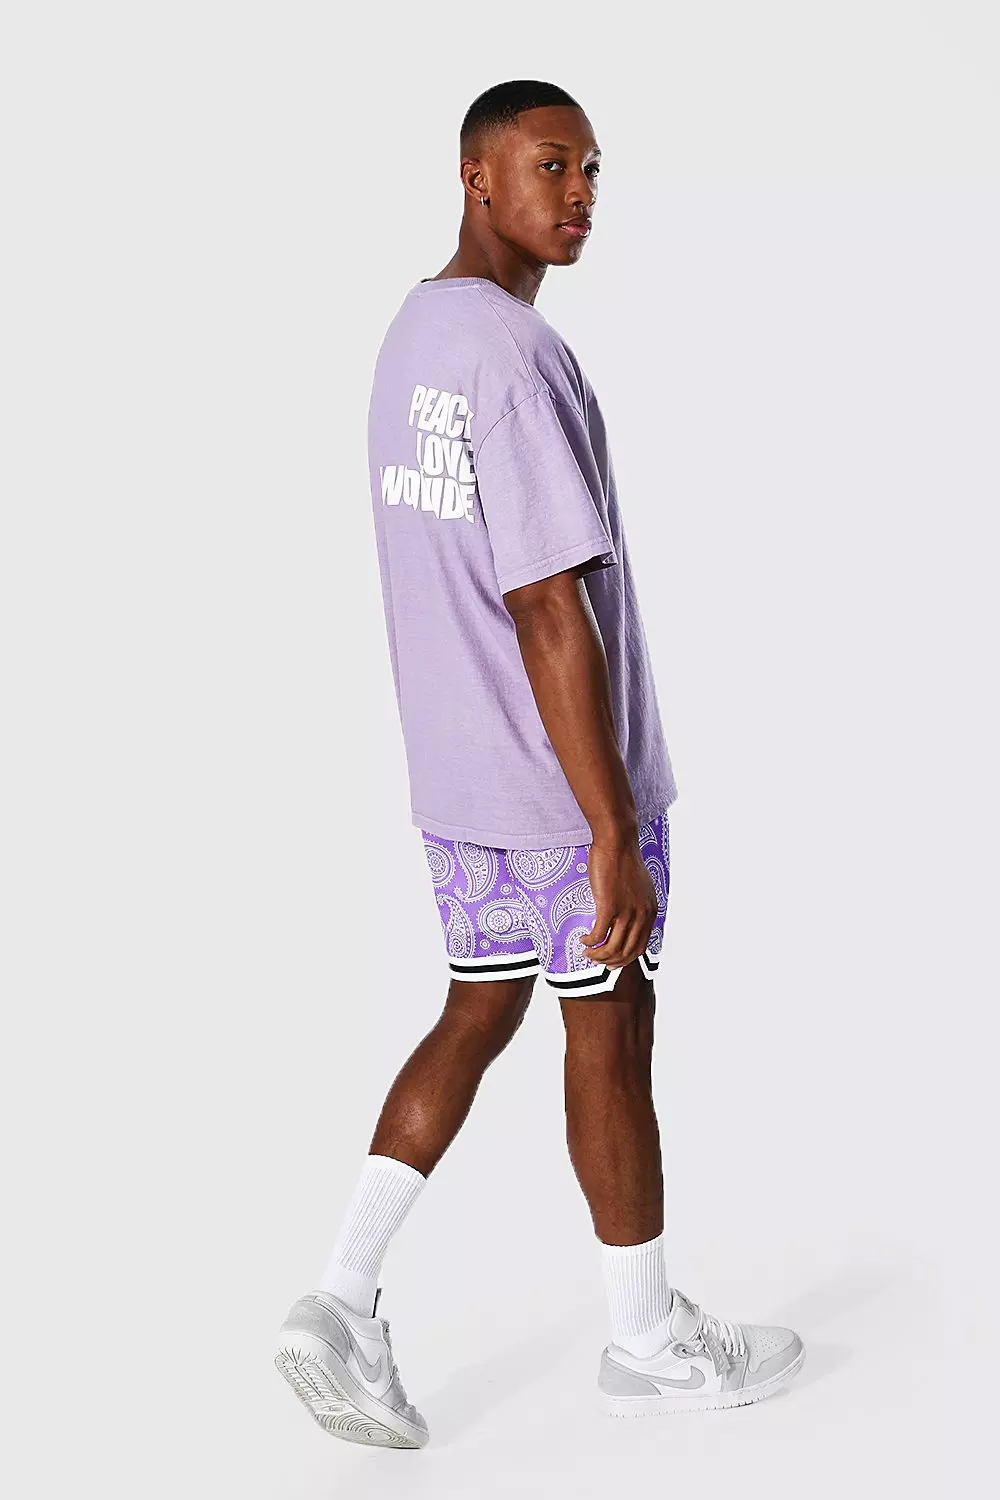 boohooMAN Men's Loose Bandana Print Basketball Sweat Shorts